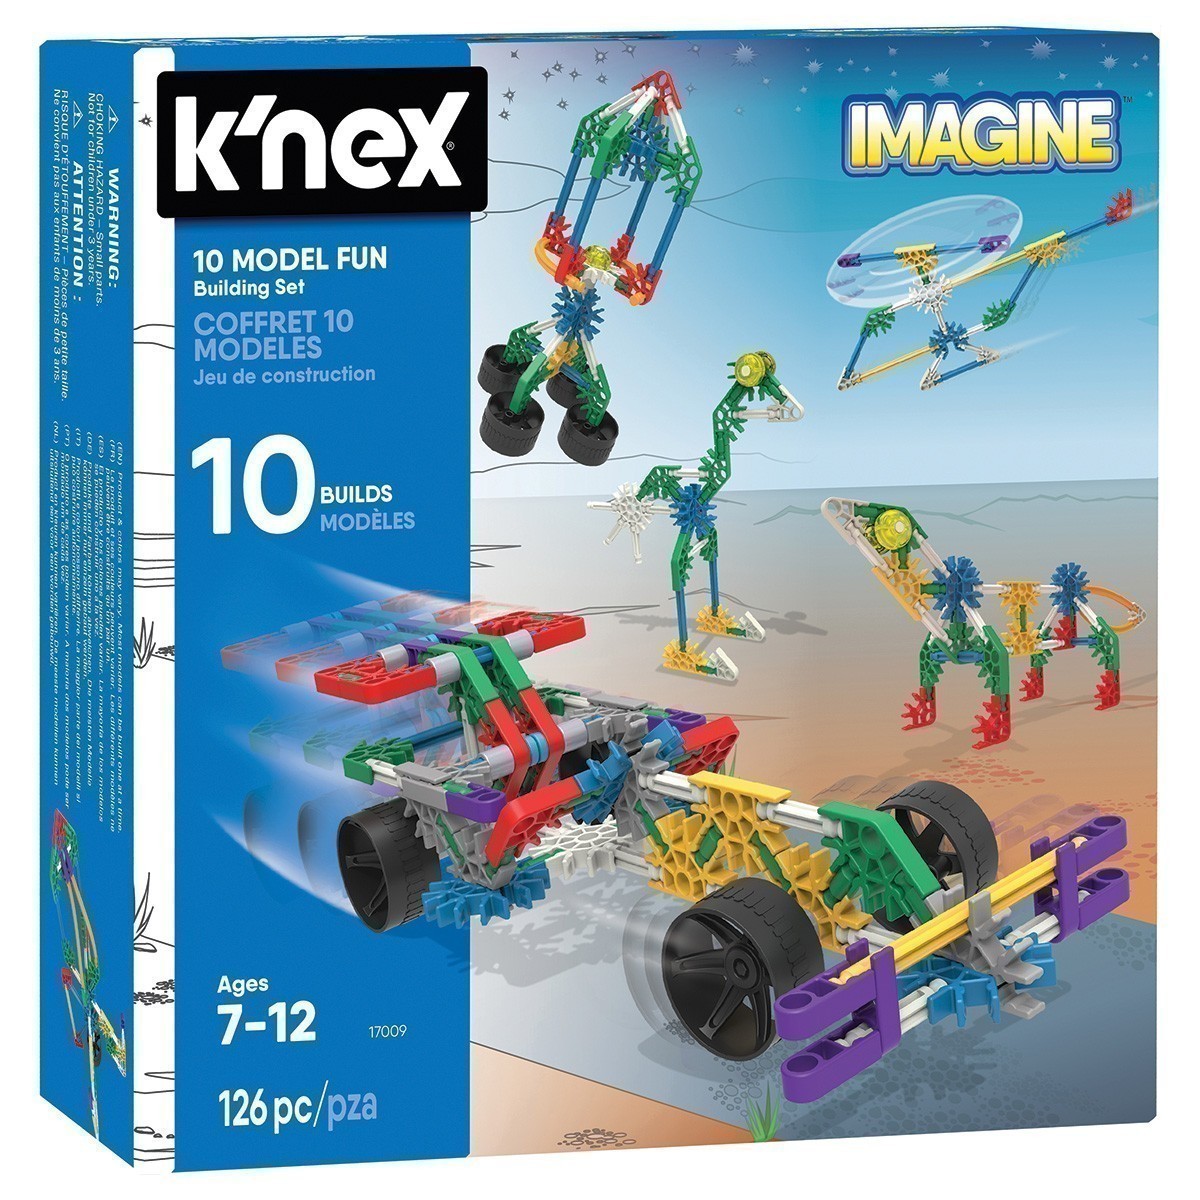 K'Nex Imagine 10 Model Fun Building Set